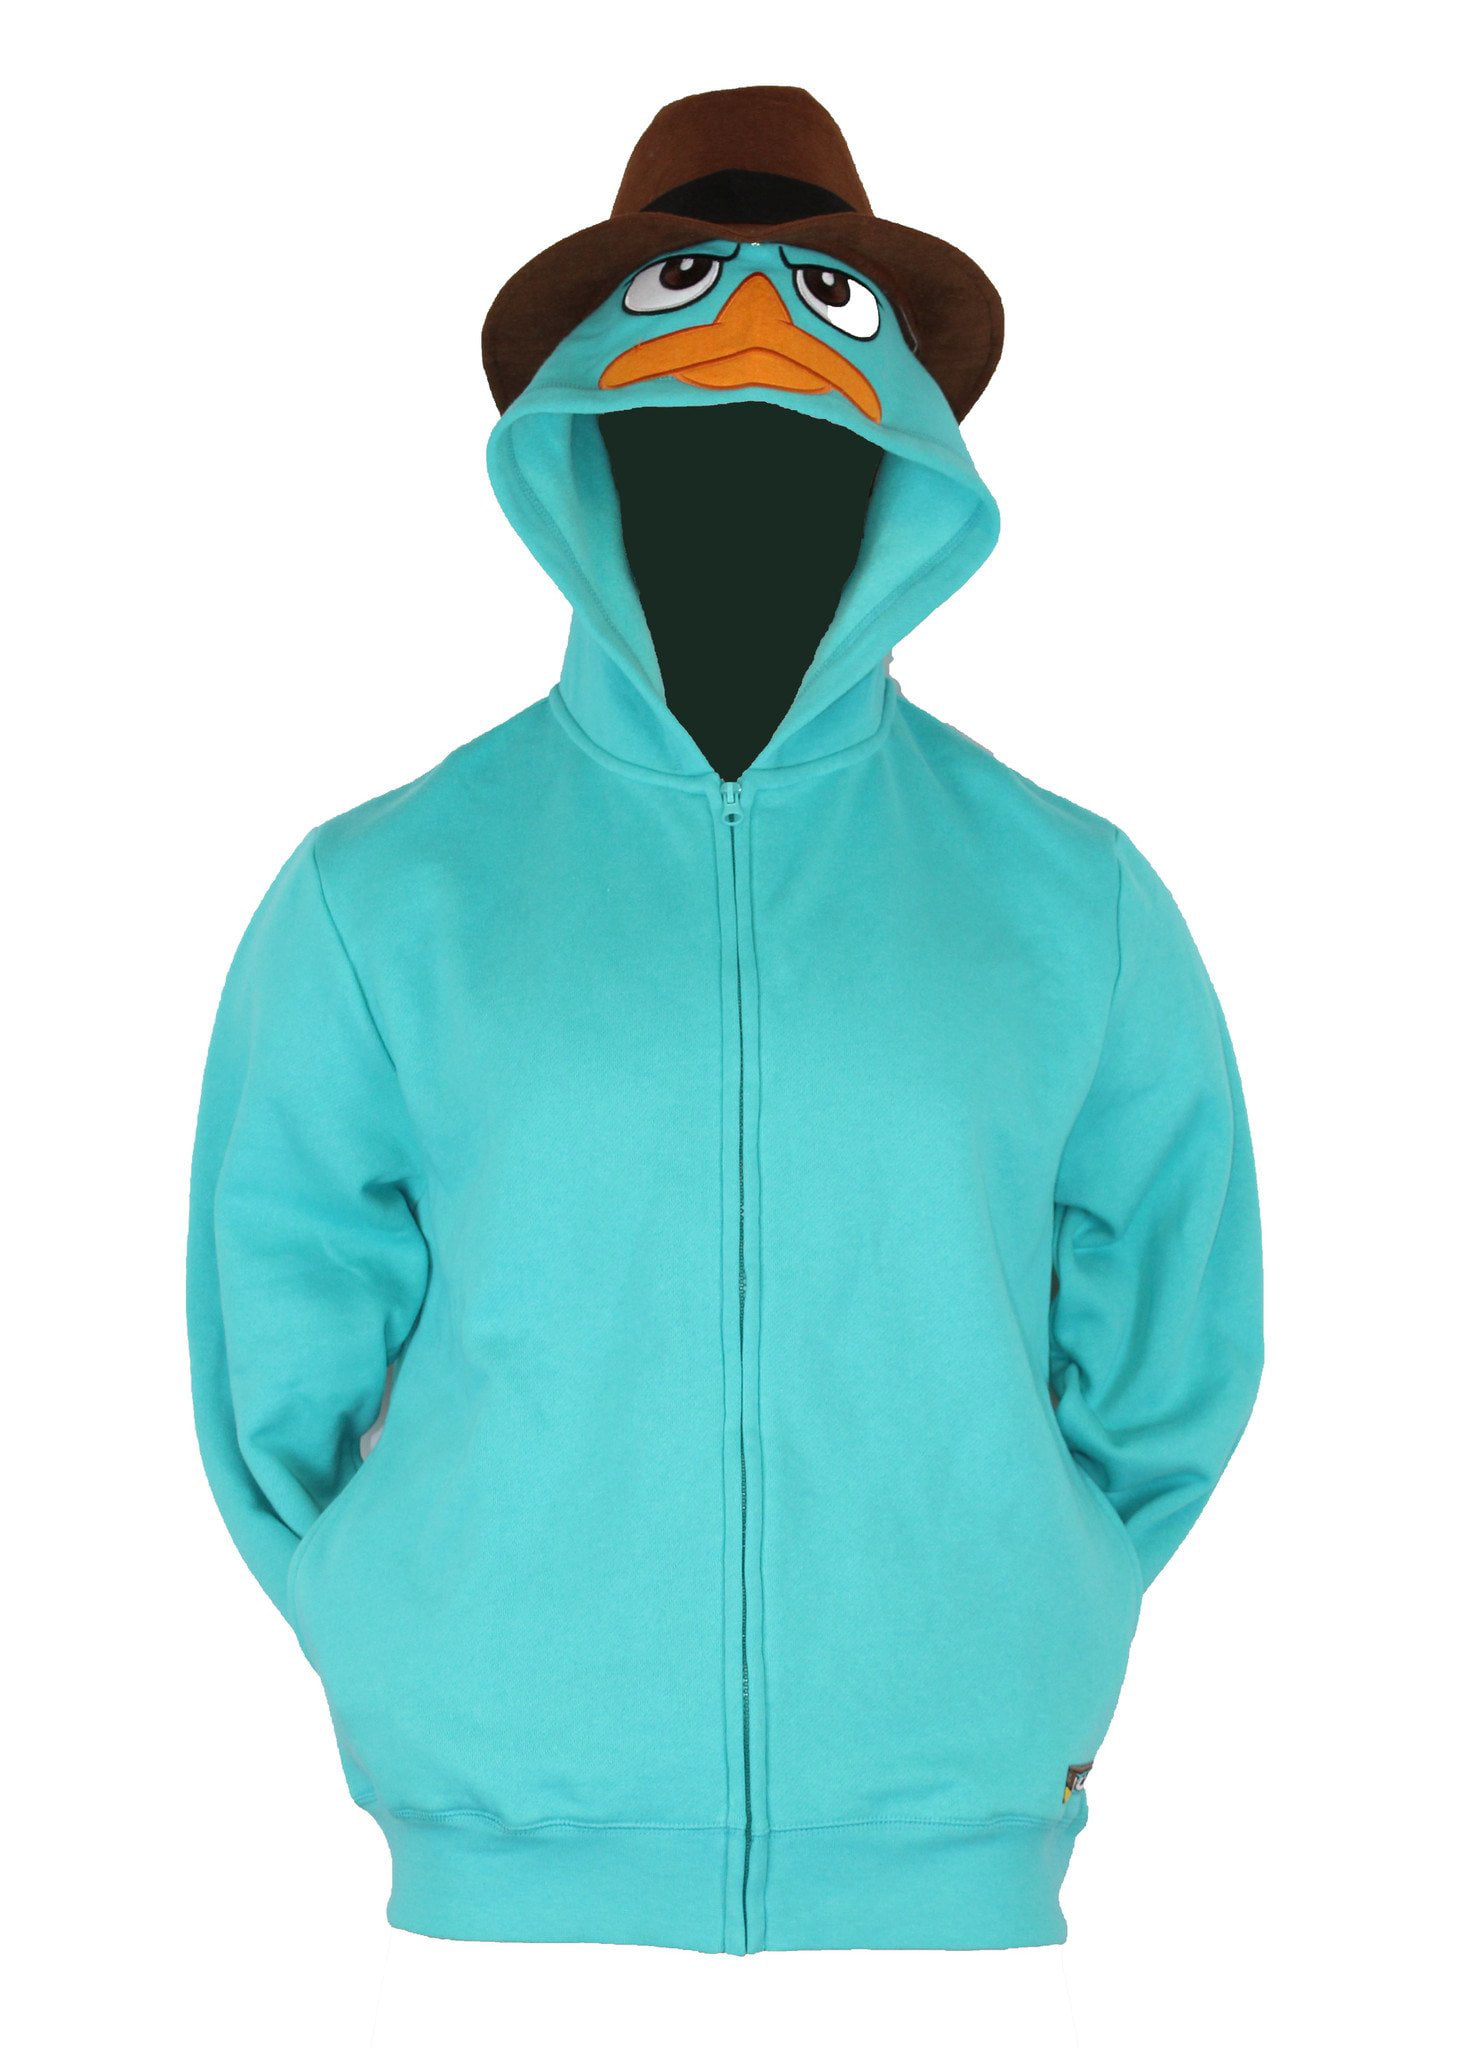 Perry The Platypus Mens Fashion Zipper Pullover Hoodie Sweatshirts